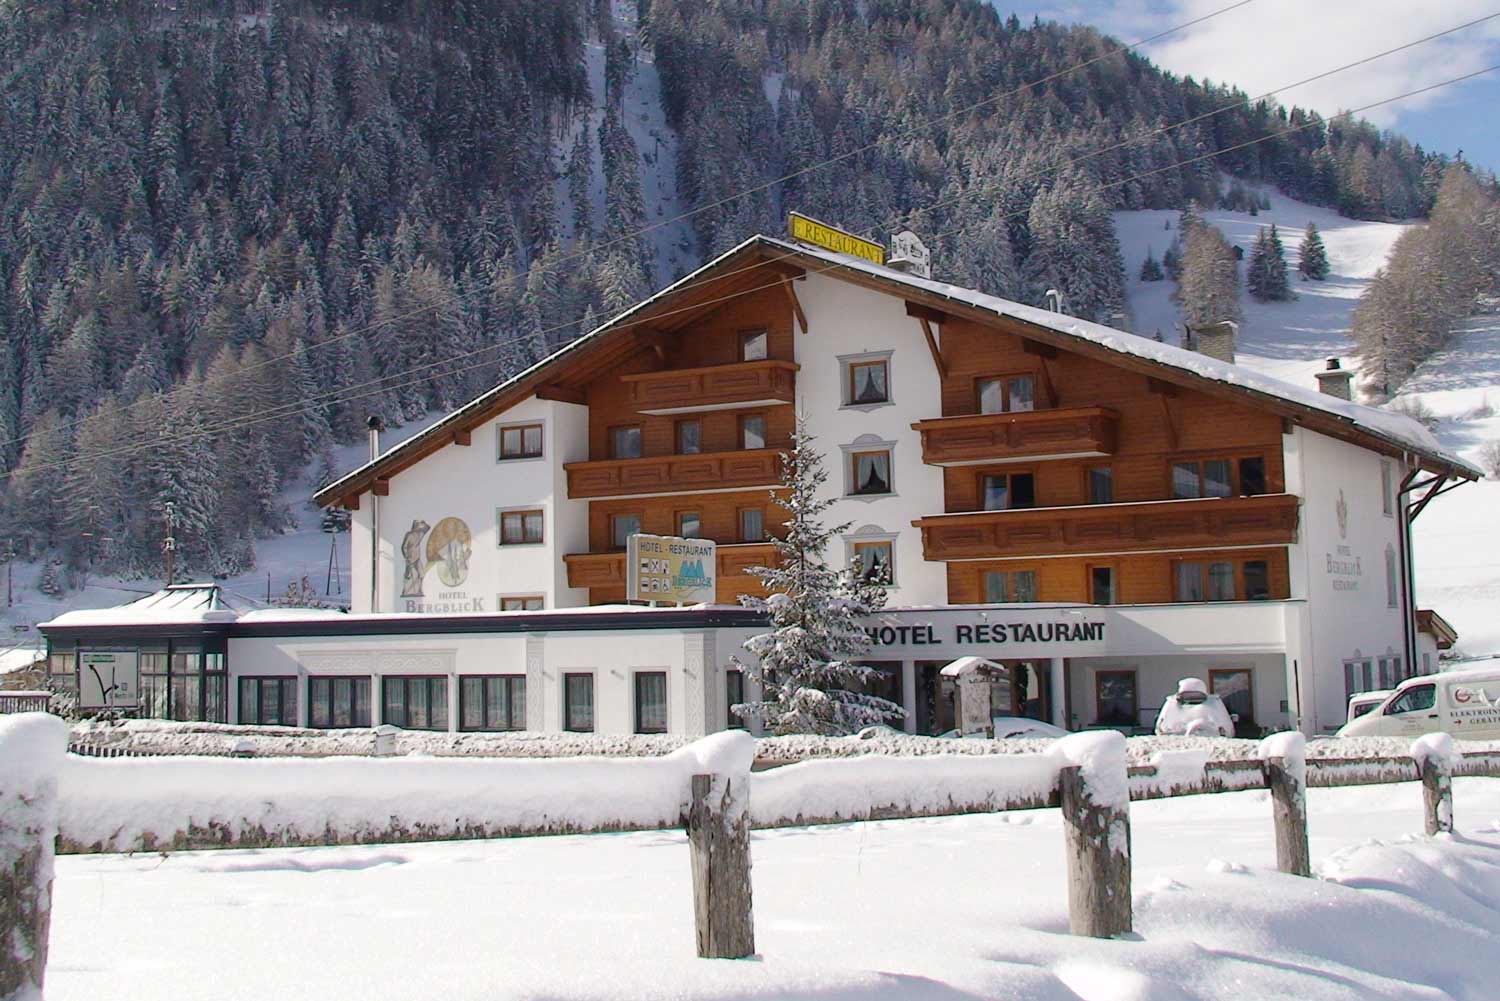 Hotel Bergblick in Nauders